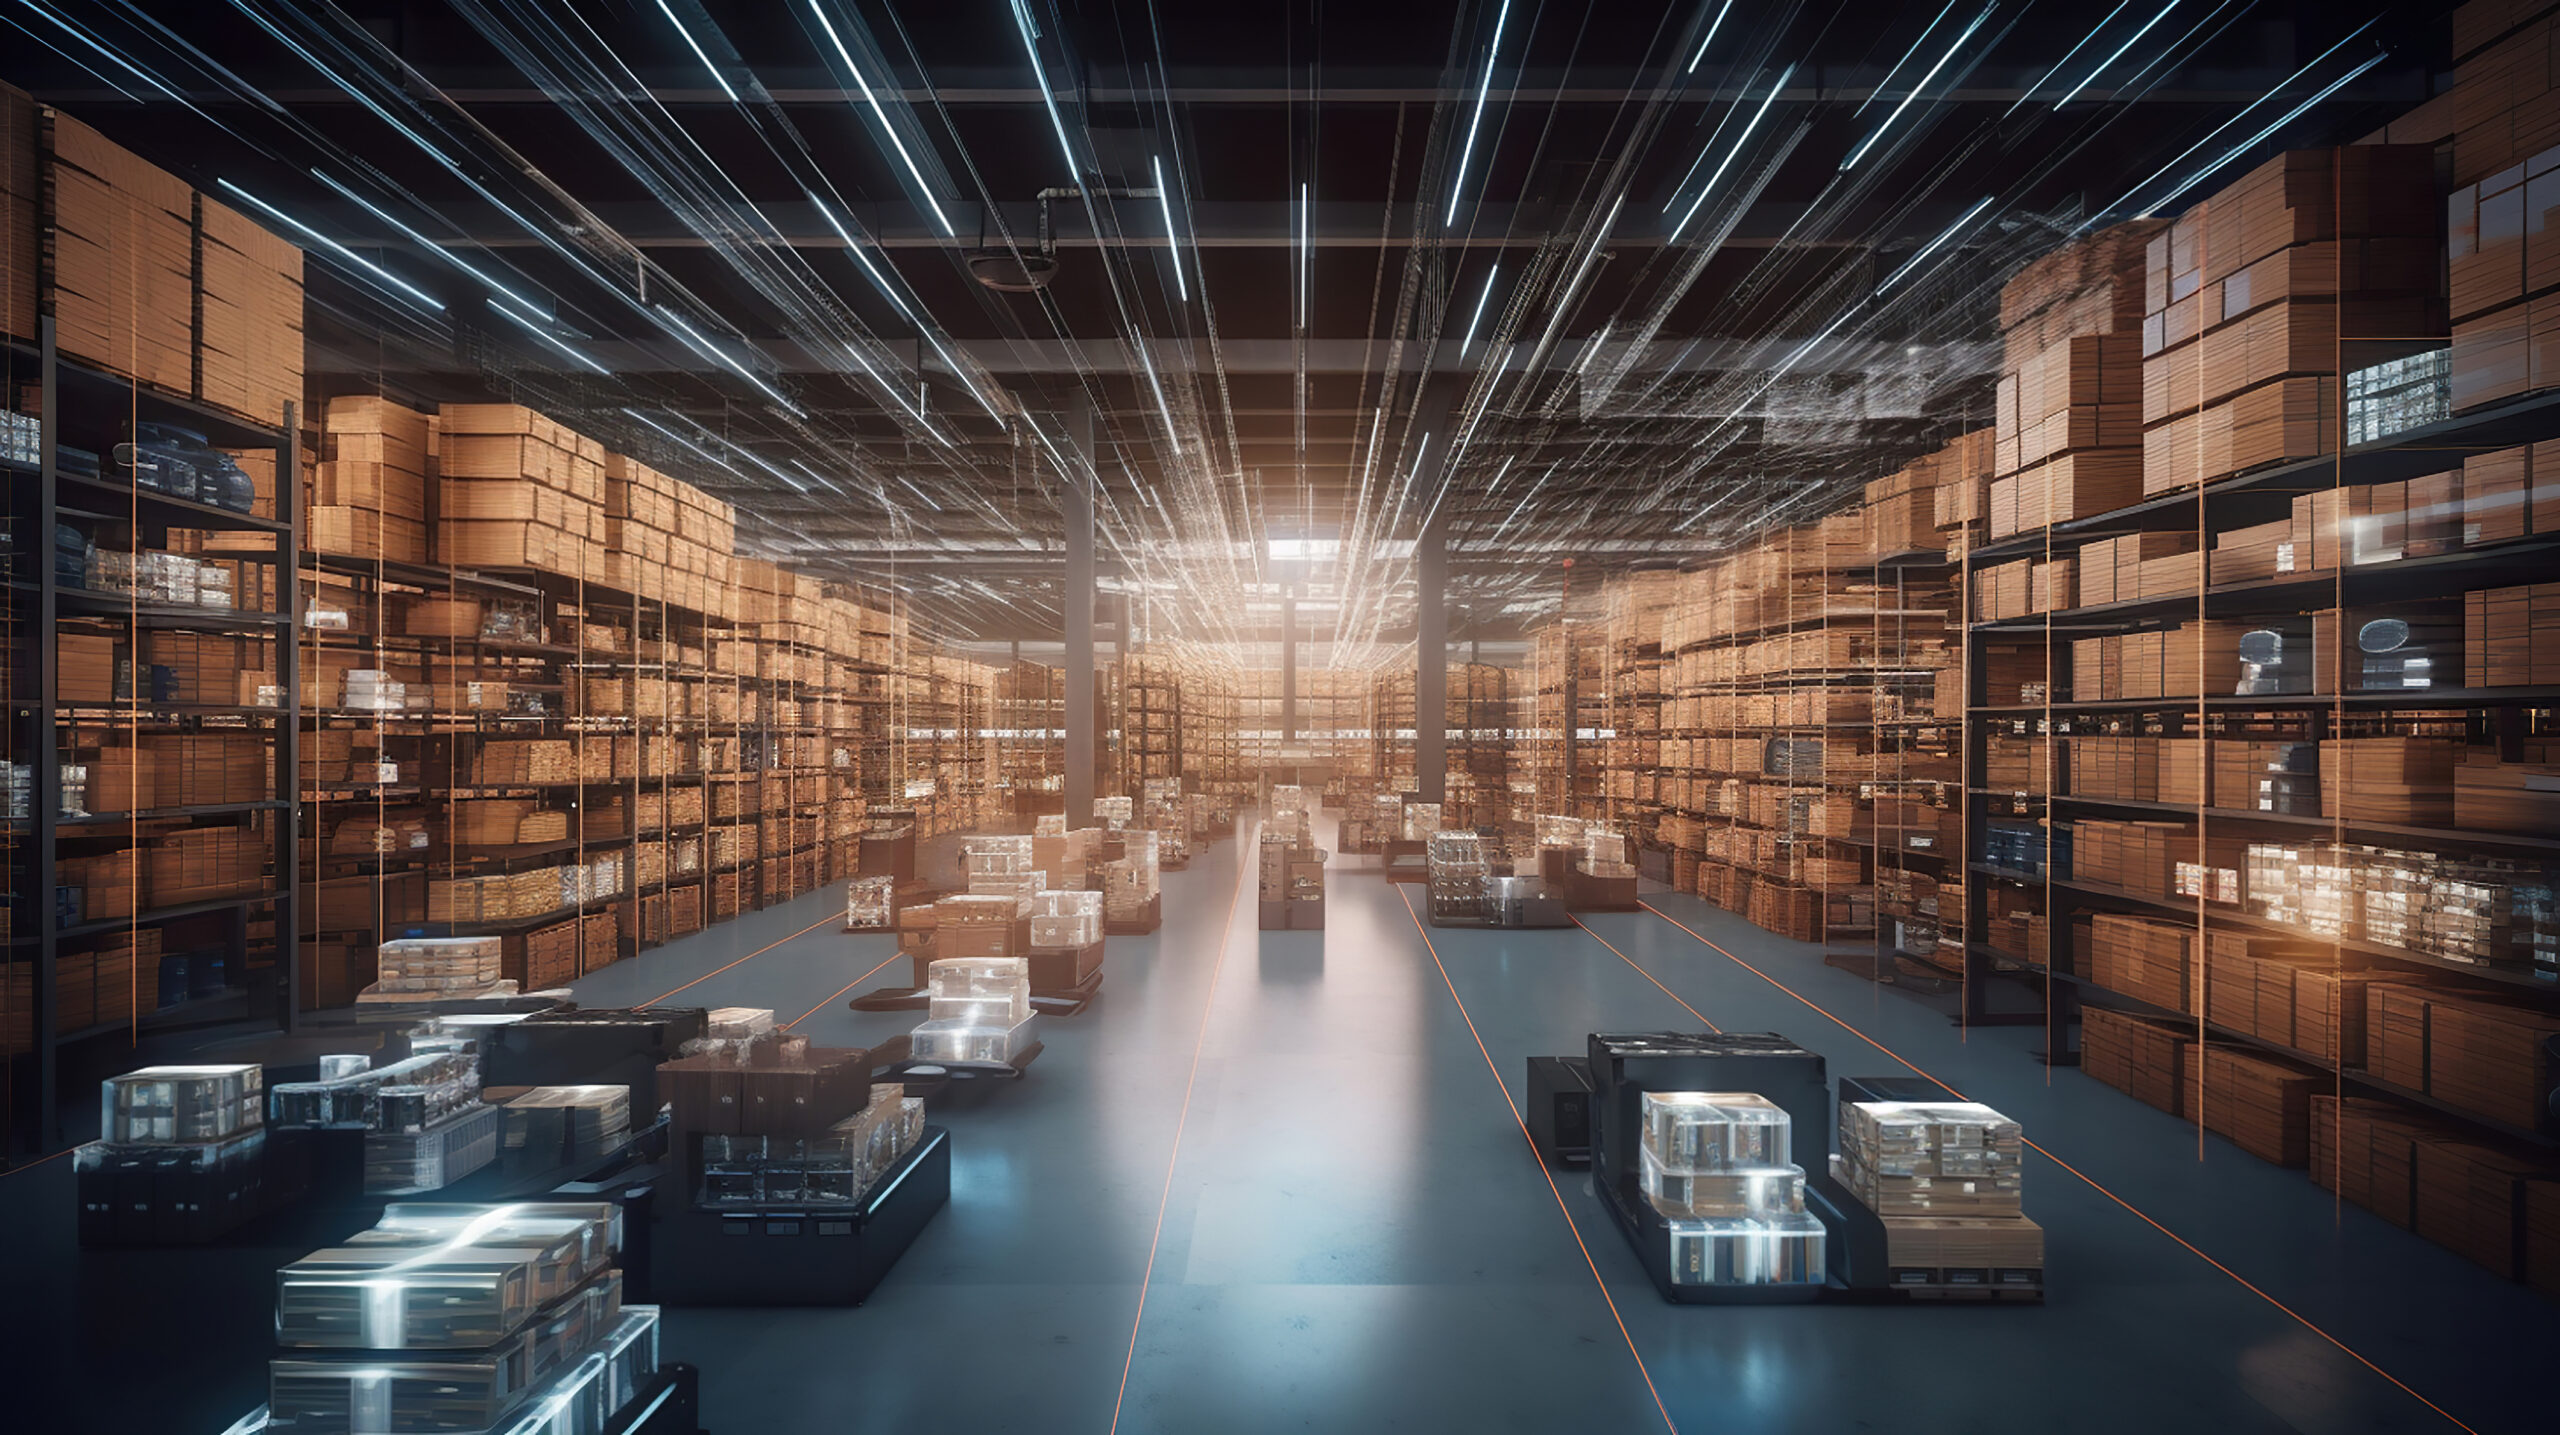 Futuristic Technology Retail Warehouse: Digitalization and Visua